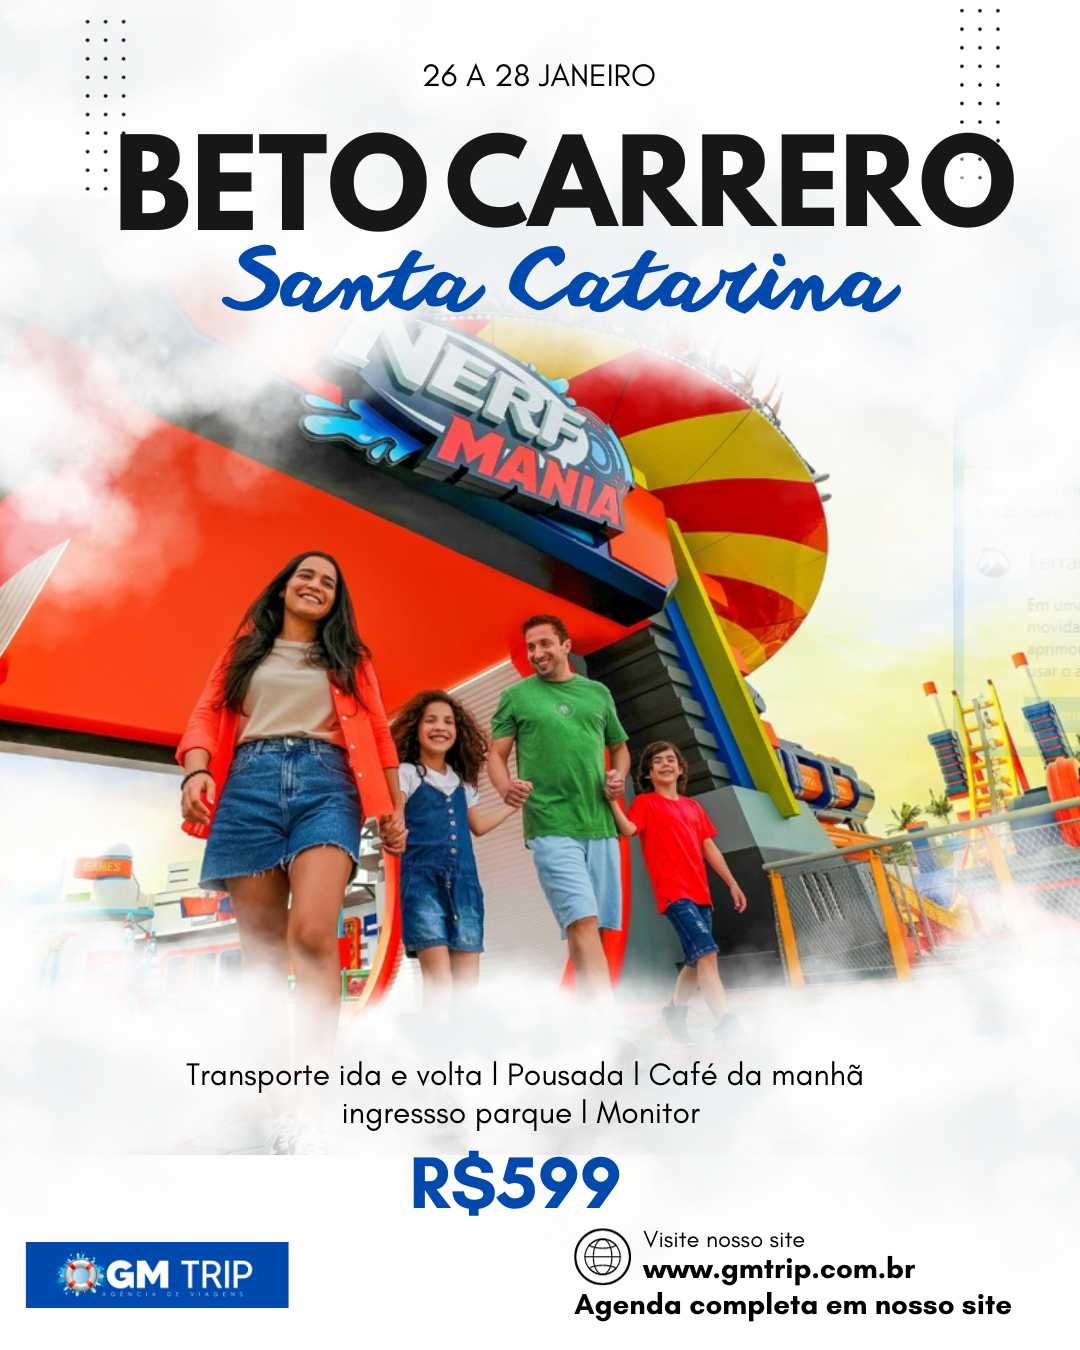 BETO CARRERO - JANEIRO